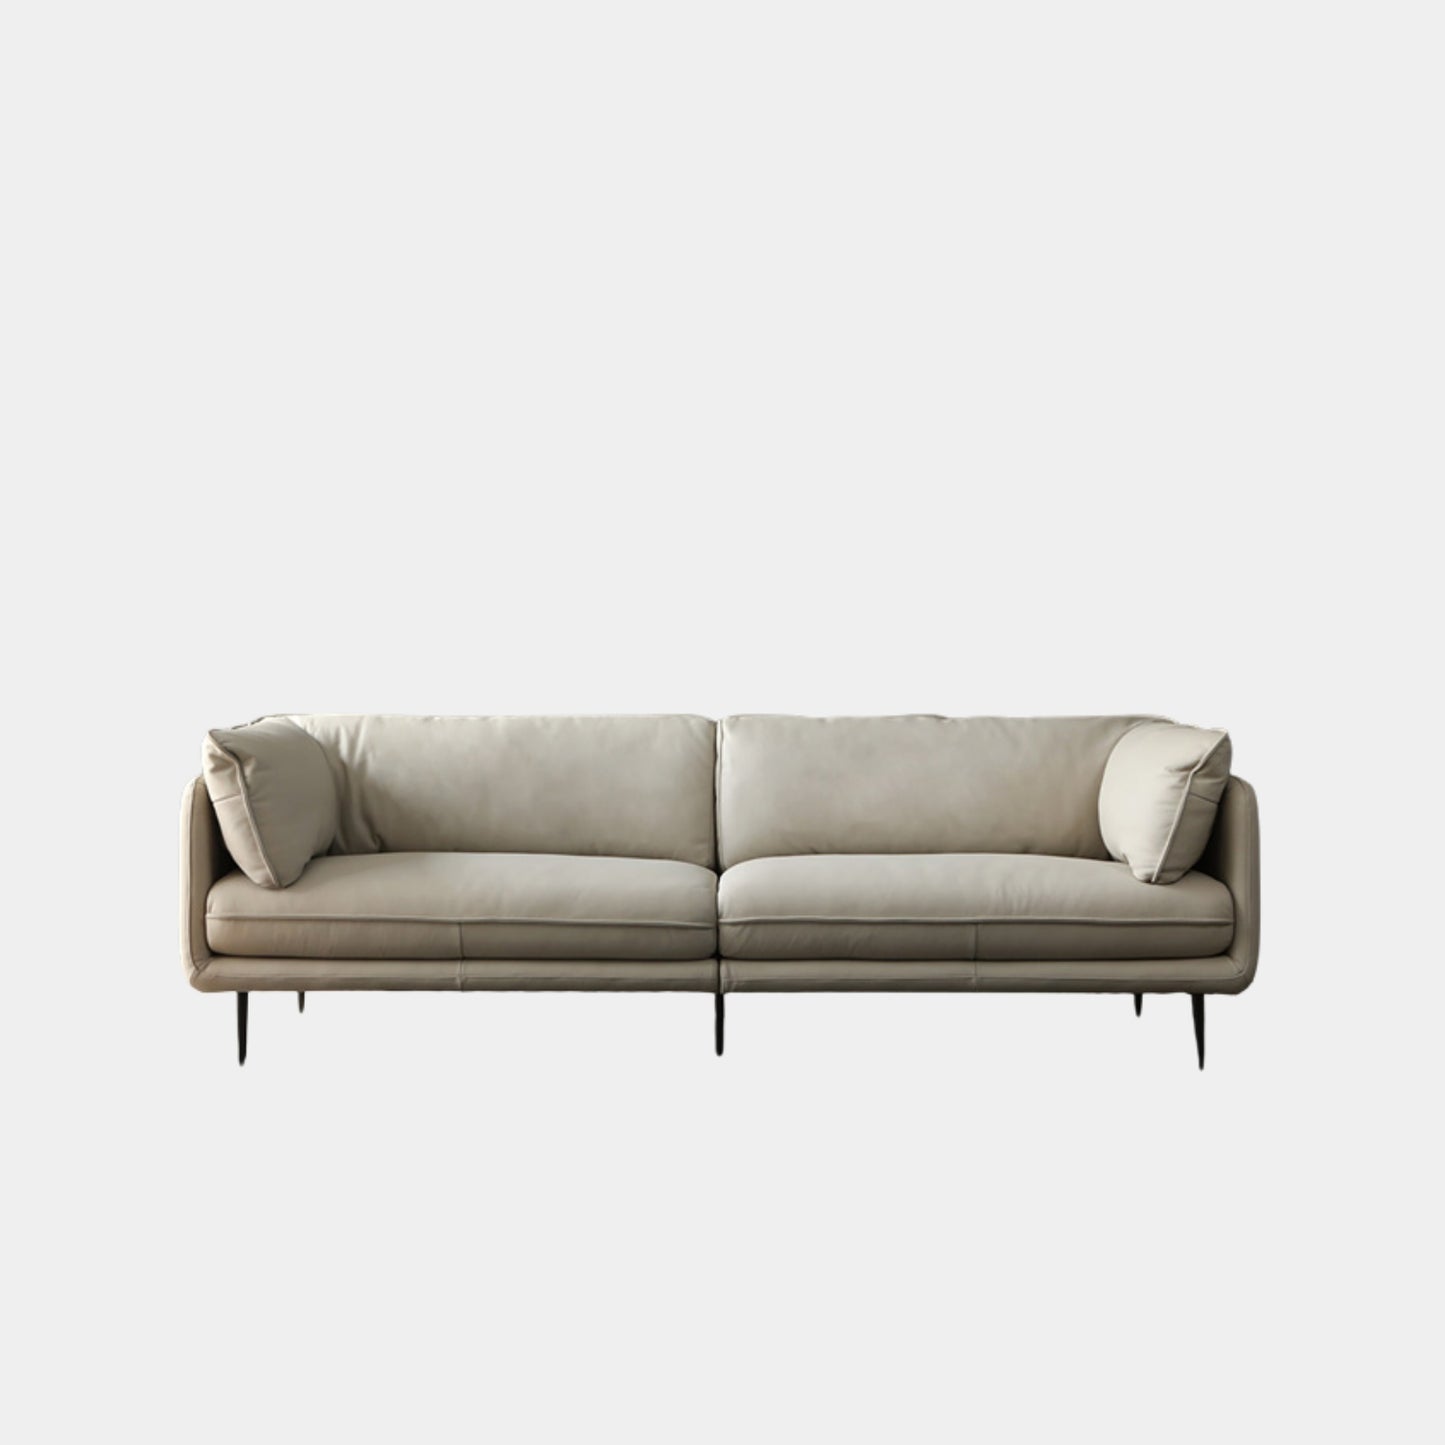 Cuddle half leather sofa white